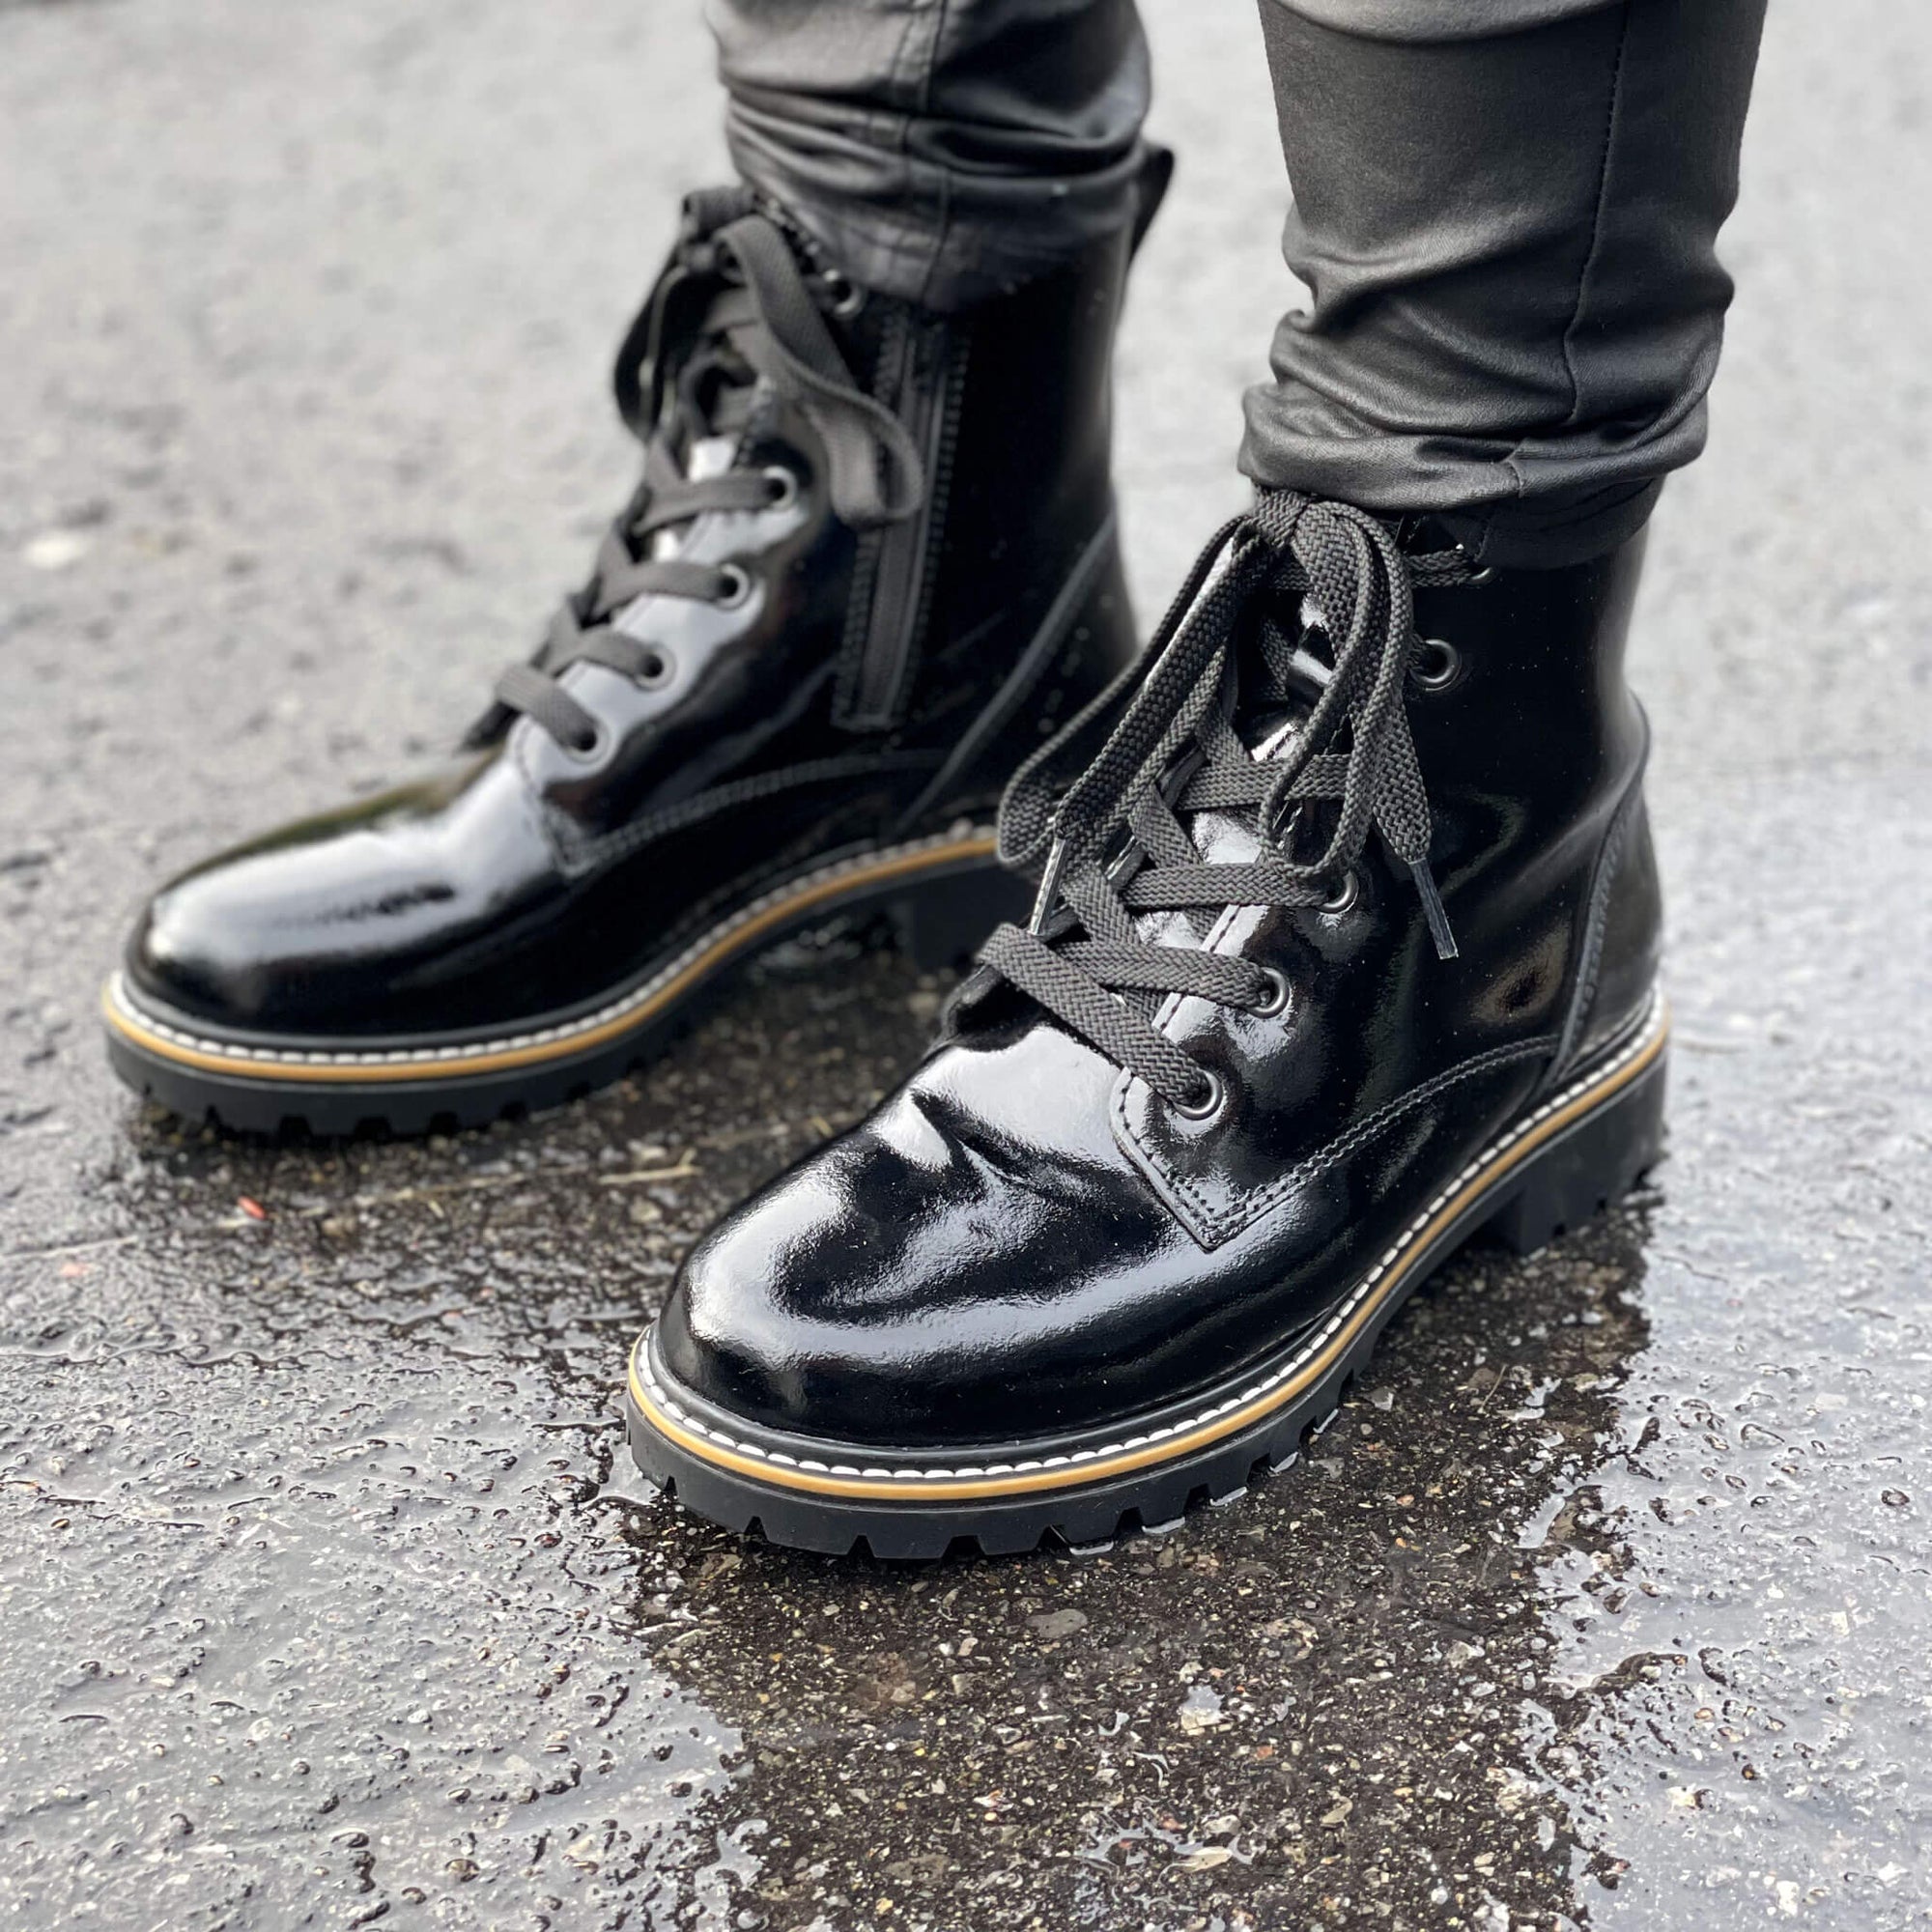 Nina 3-season Boot for Women - Black Patent